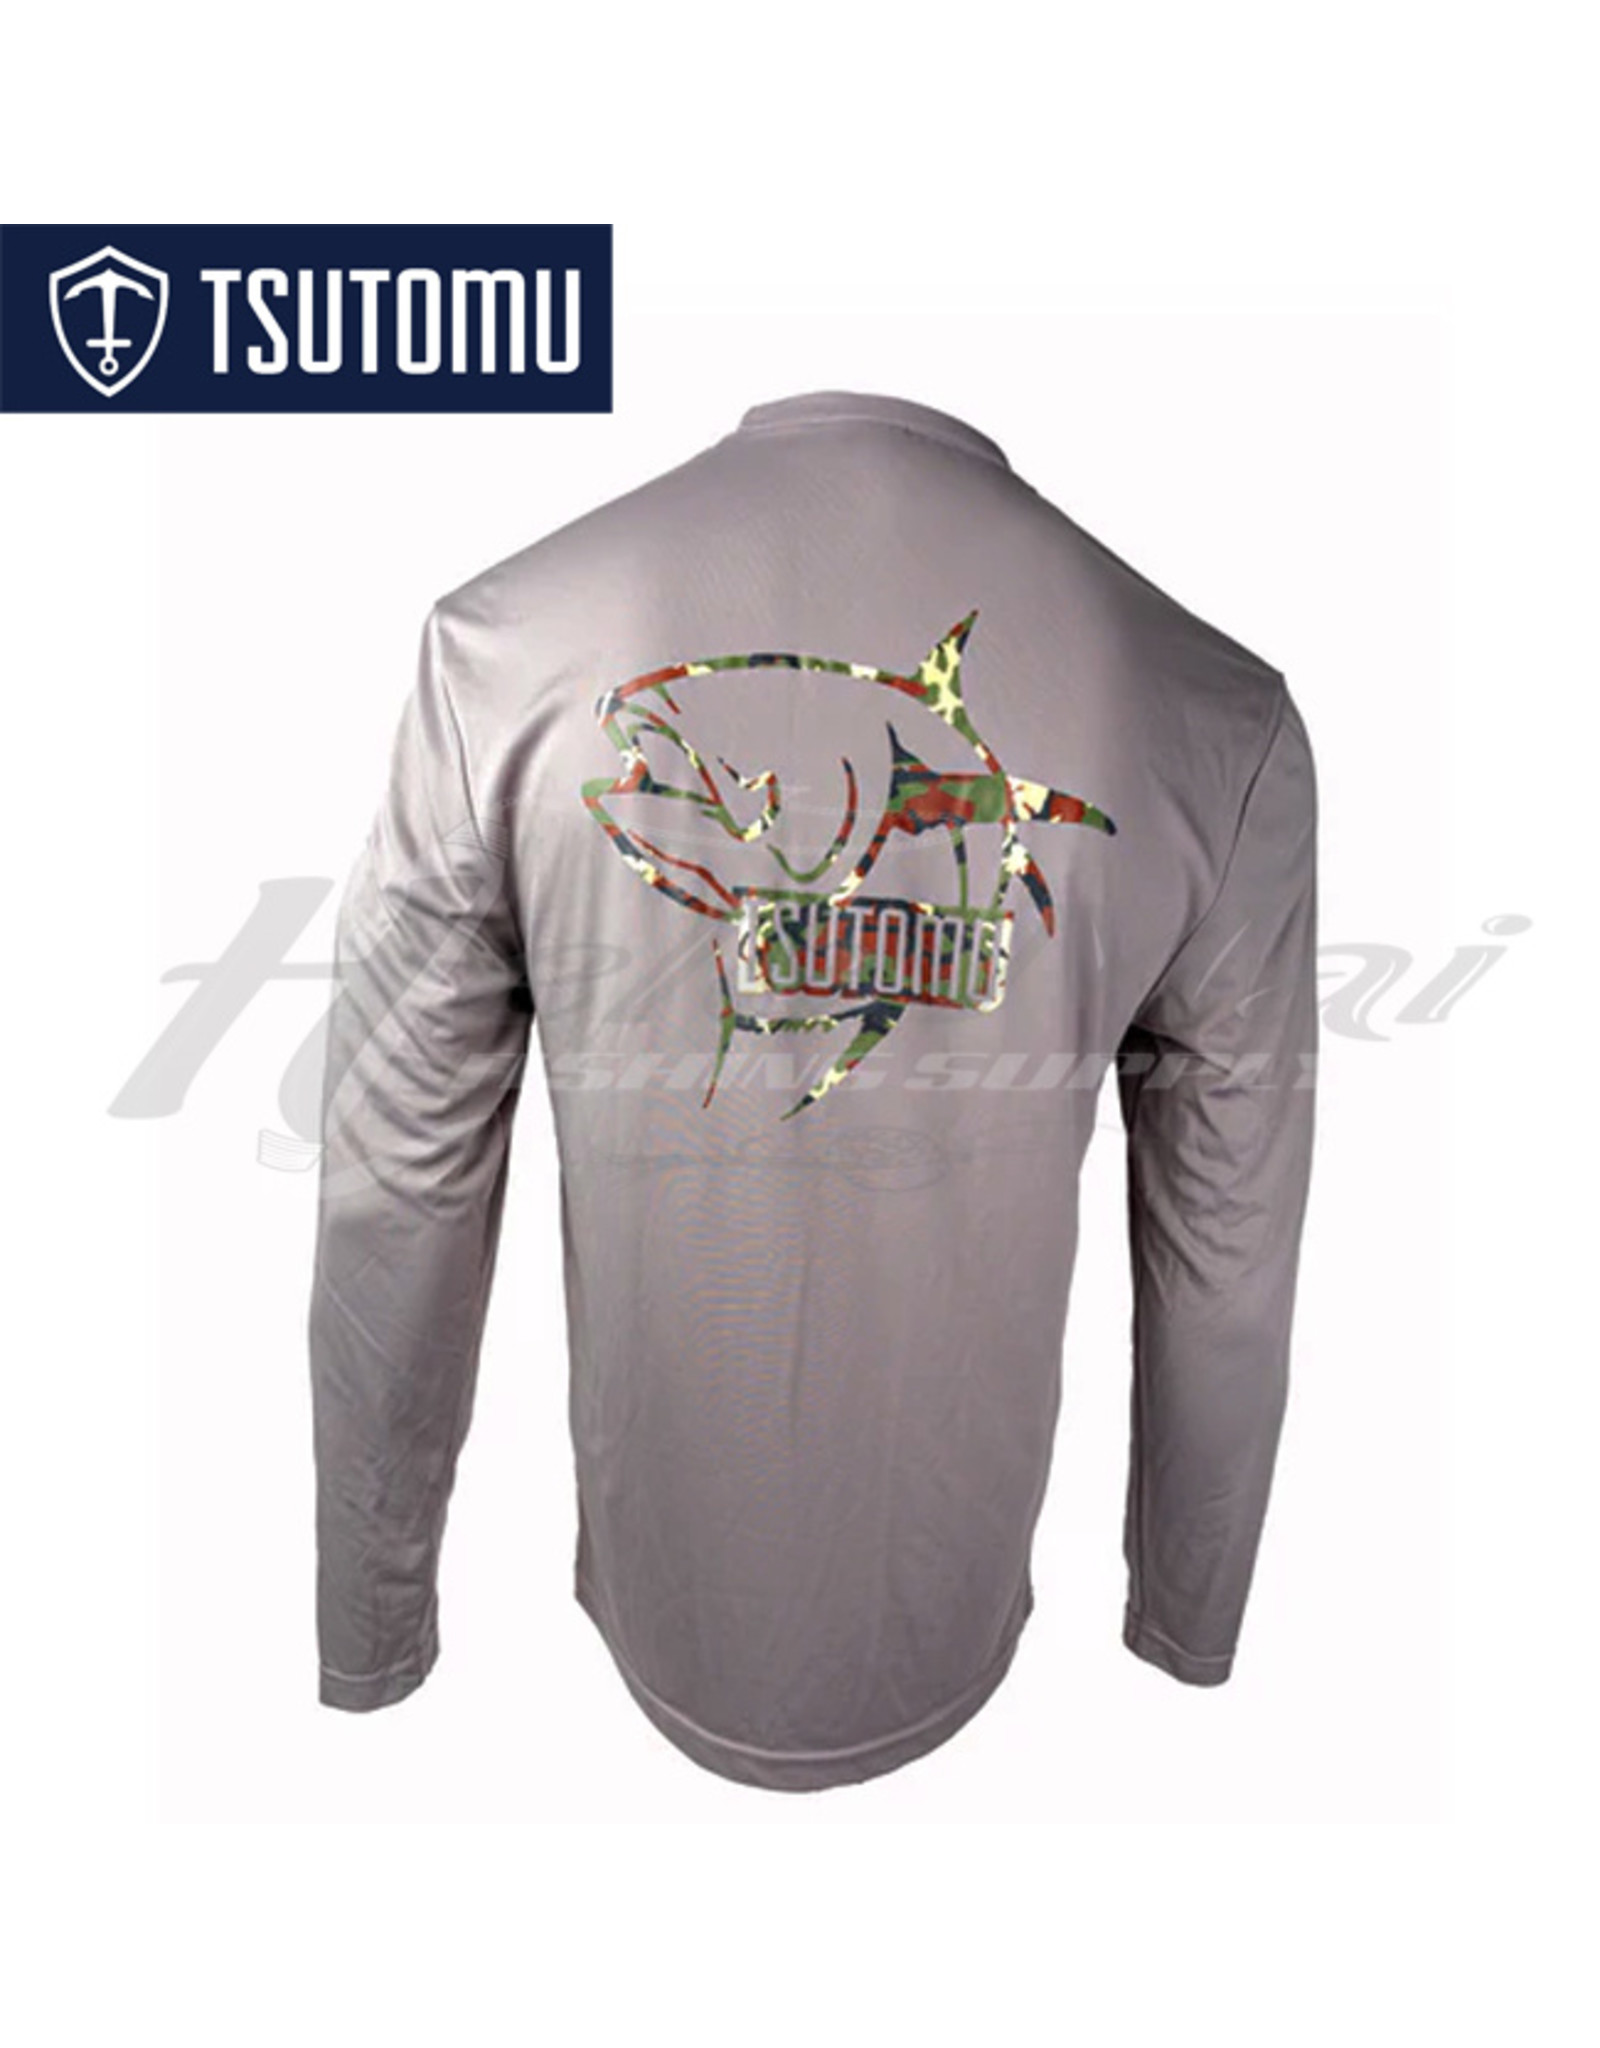 TSUTOMU Tsutomu Dry Fit Shirt, UV+, Charcoal